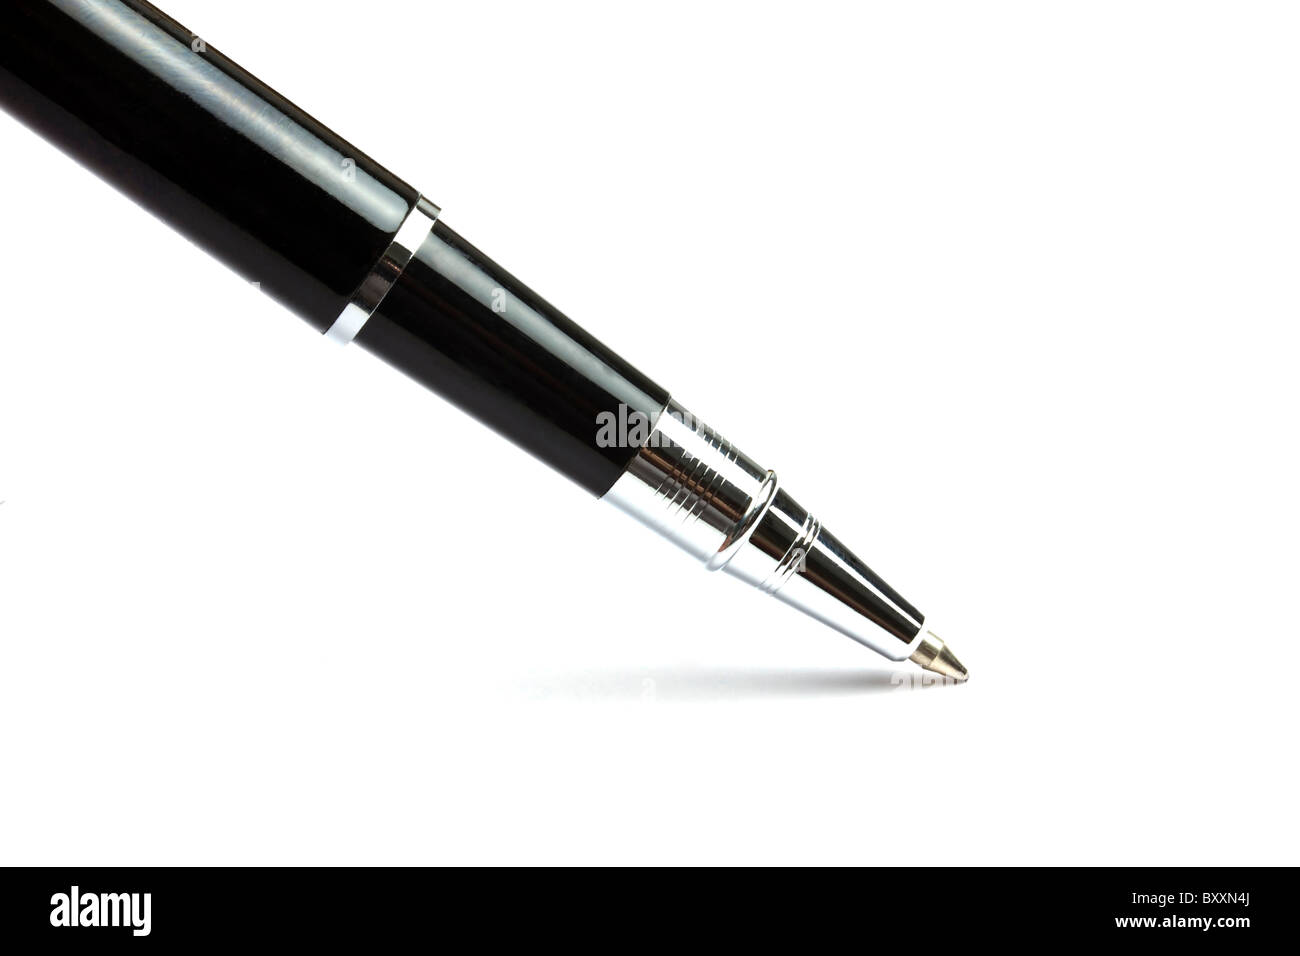 Black Ball Point Pen writing on white background Stock Photo